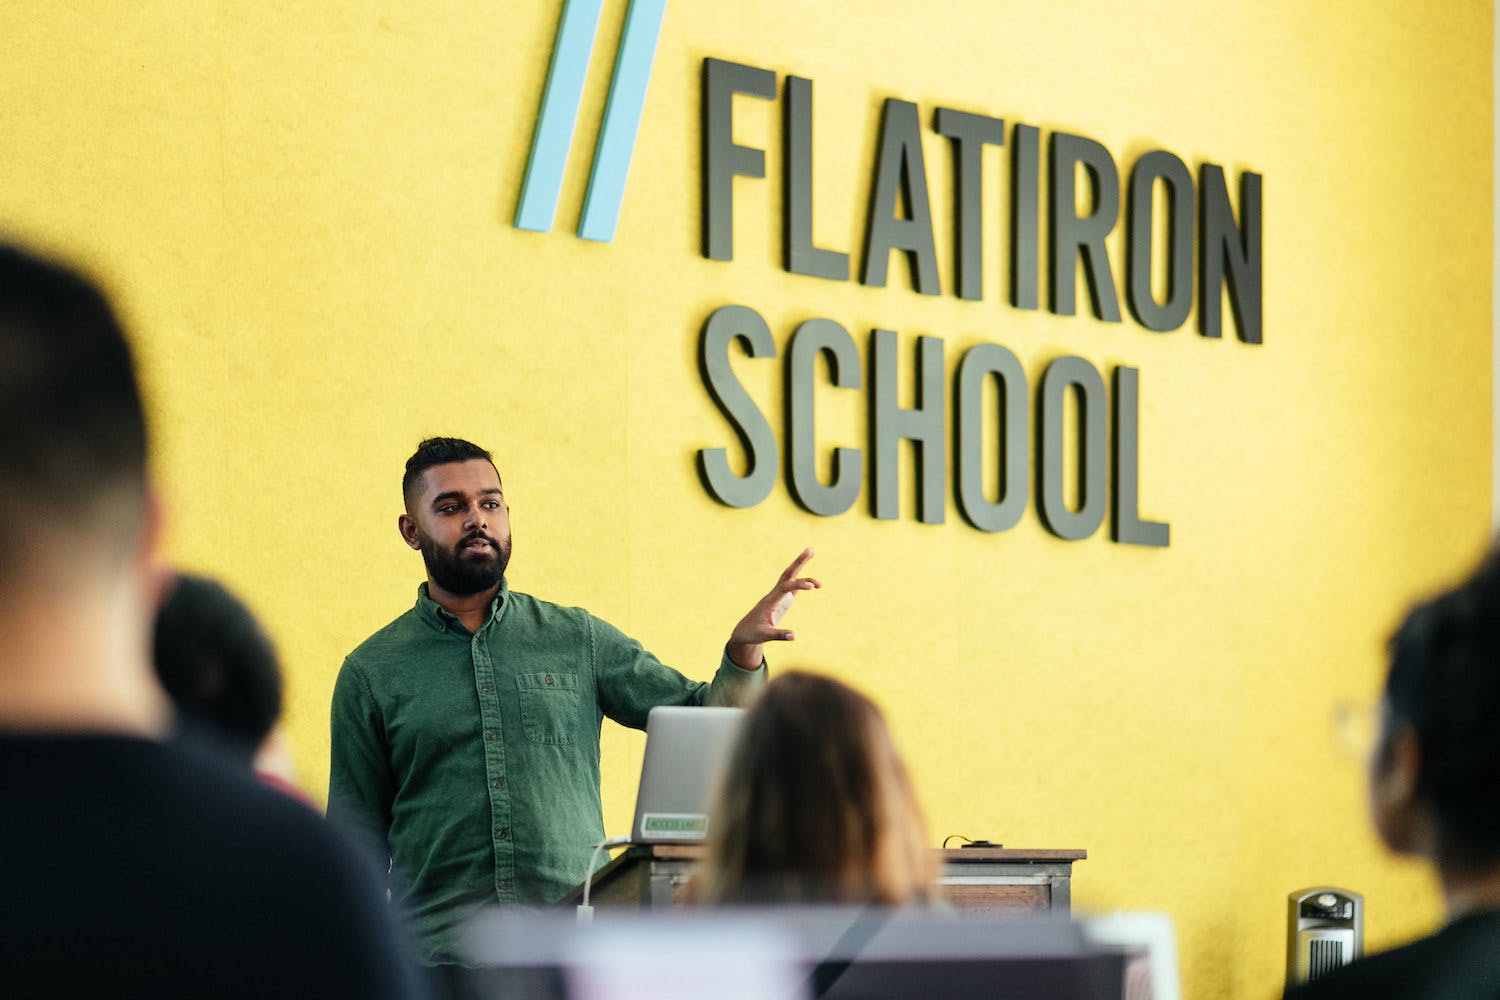 Flatiron school instructor teaches retraining course